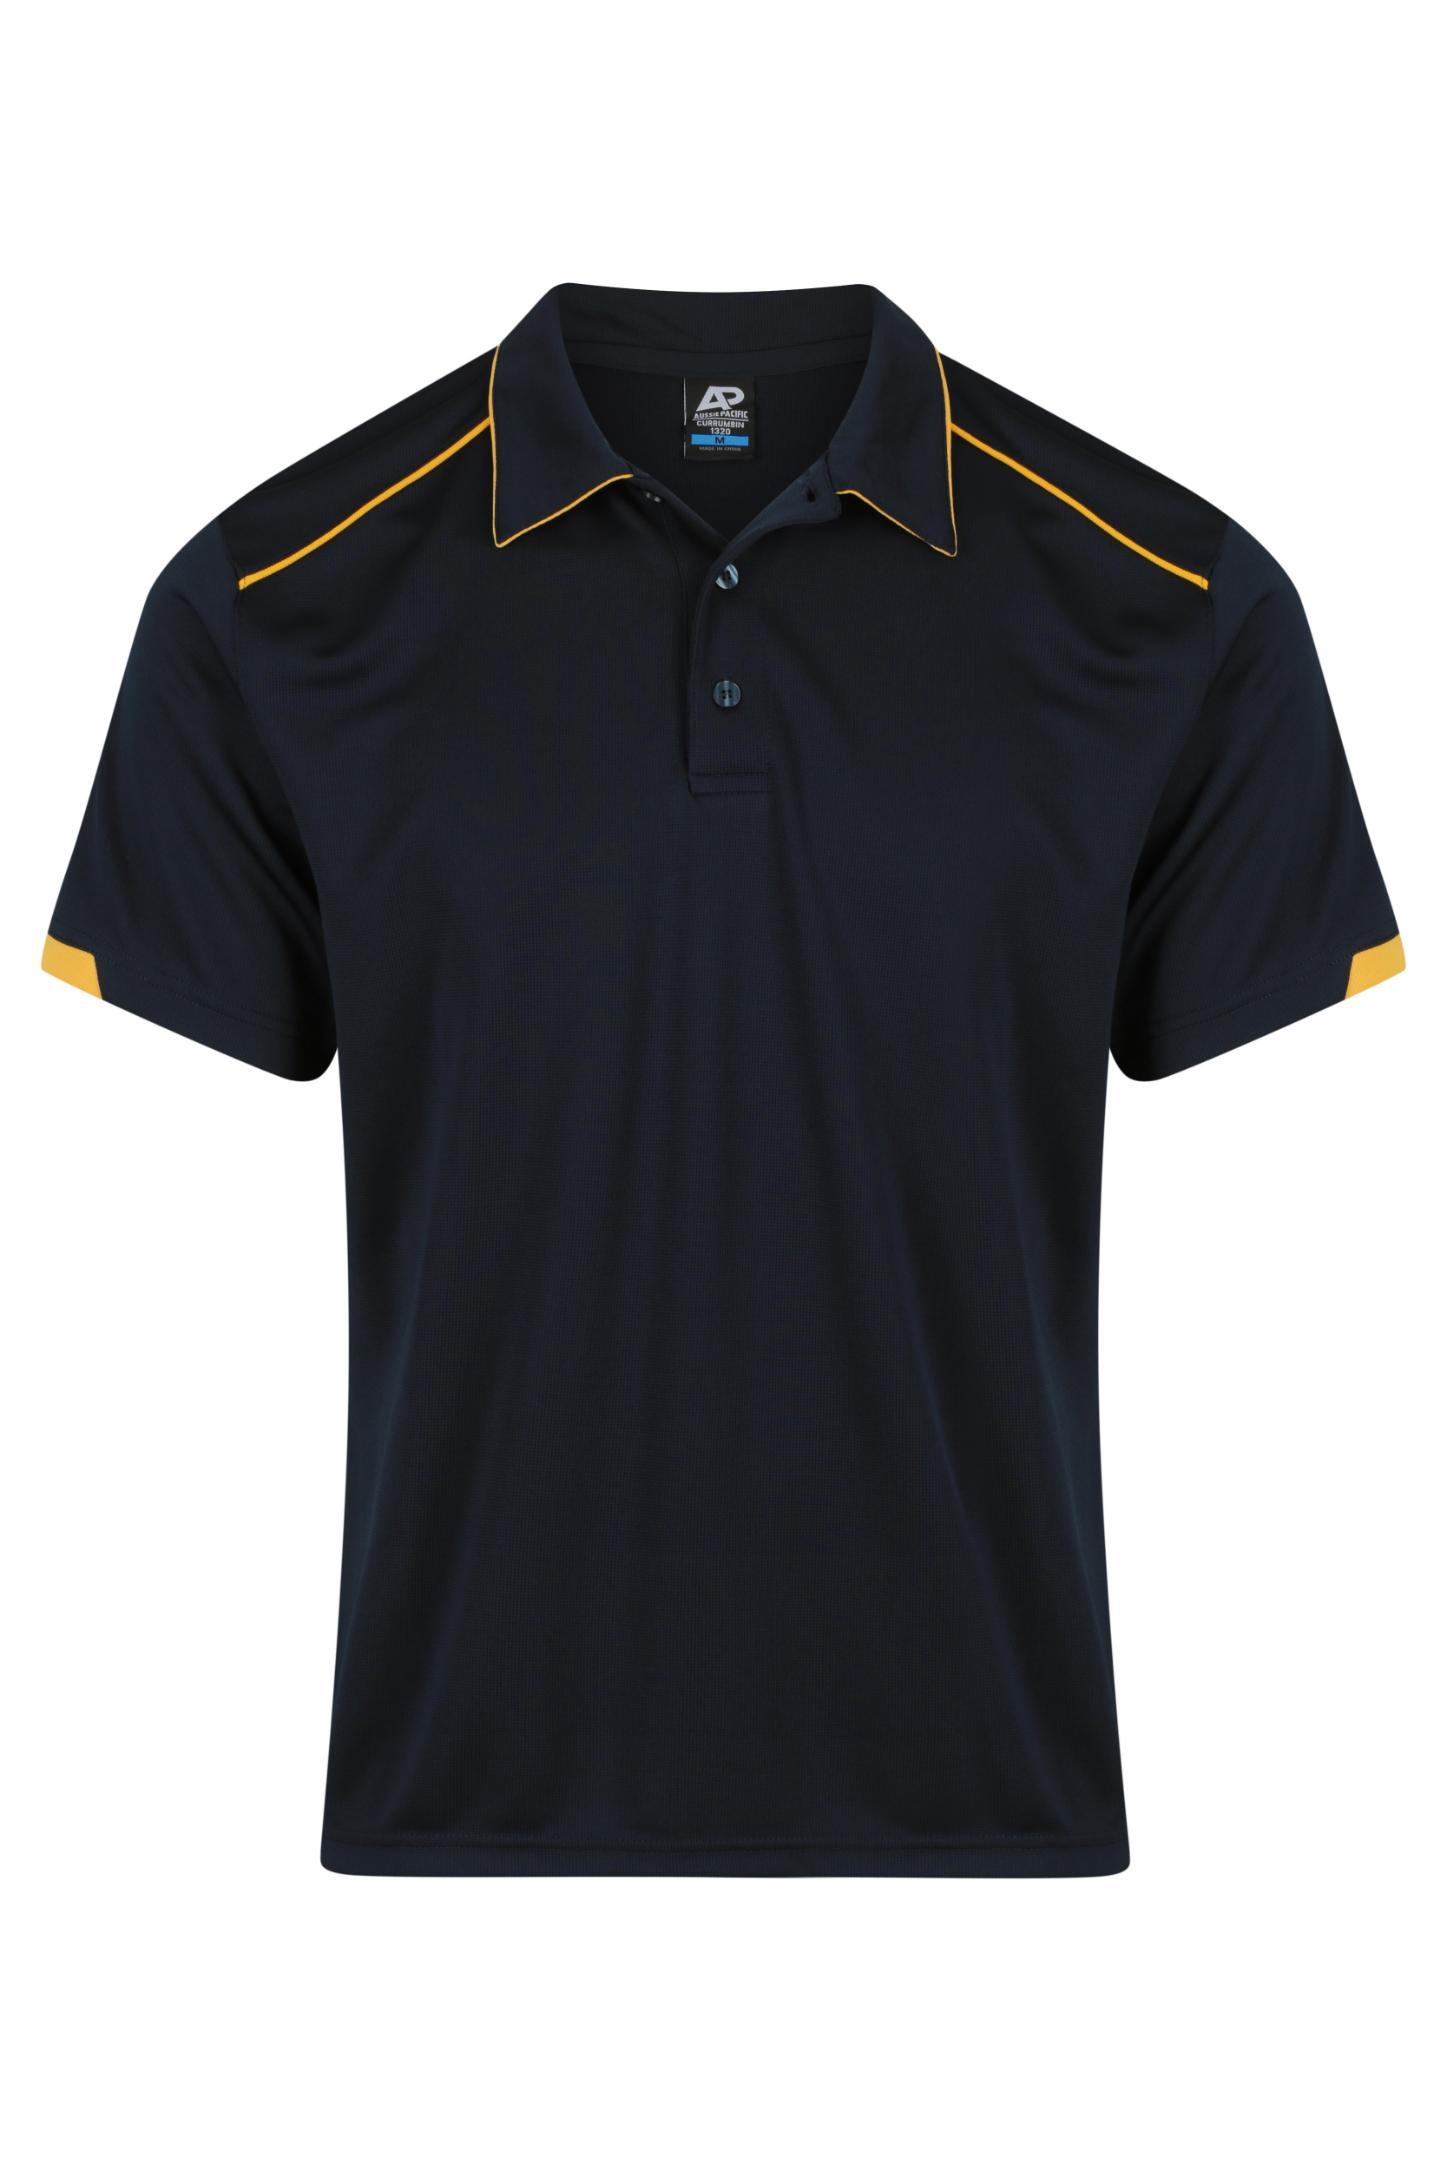 Currumbin Workwear Polo Shirts - Navy/Gold